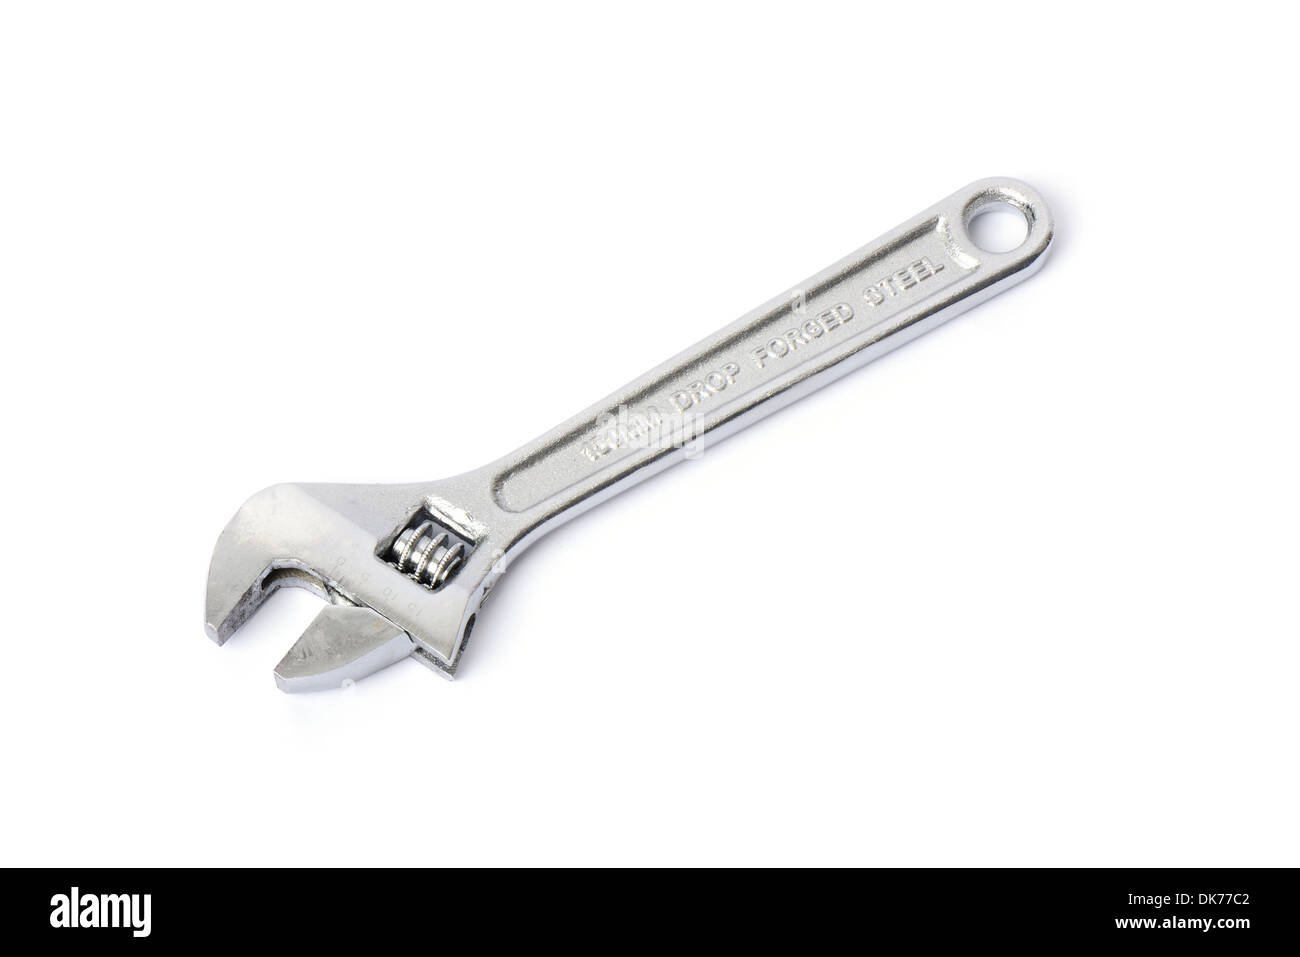 Adjustable wrench isolated on white background Stock Photo